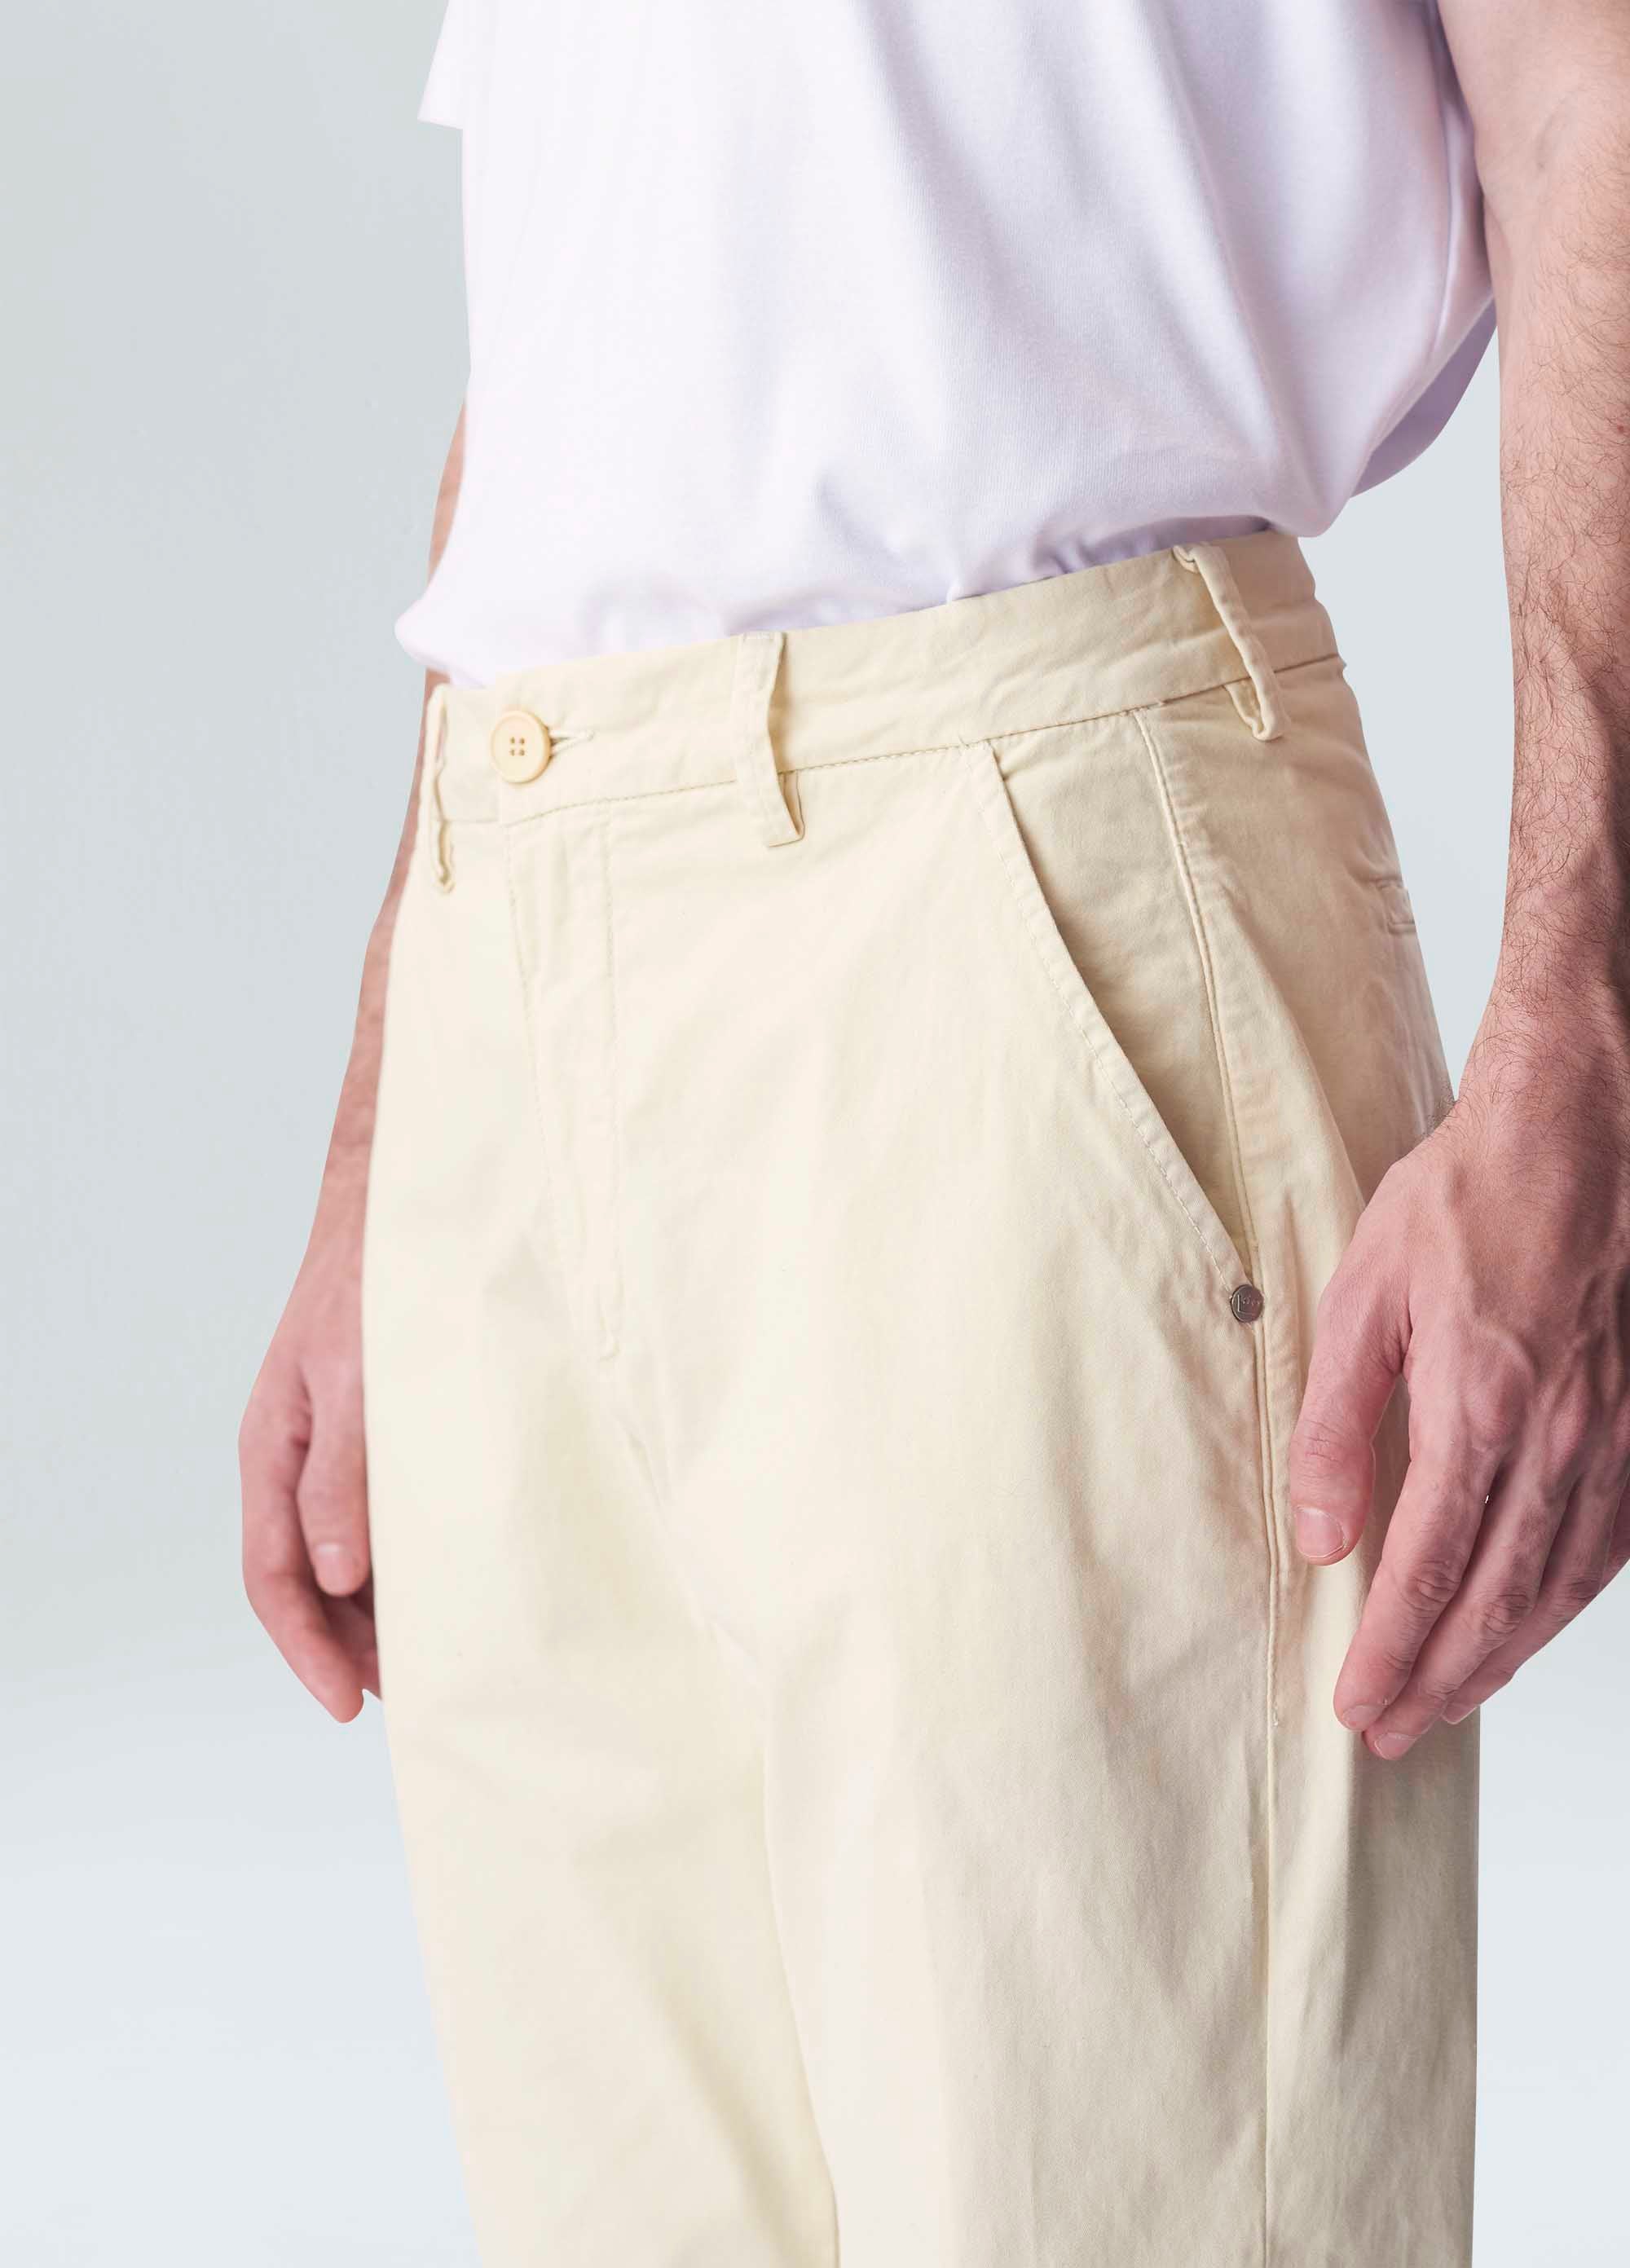 Osklen-Comfort Paper Tailoring Trousers-Justbrazil